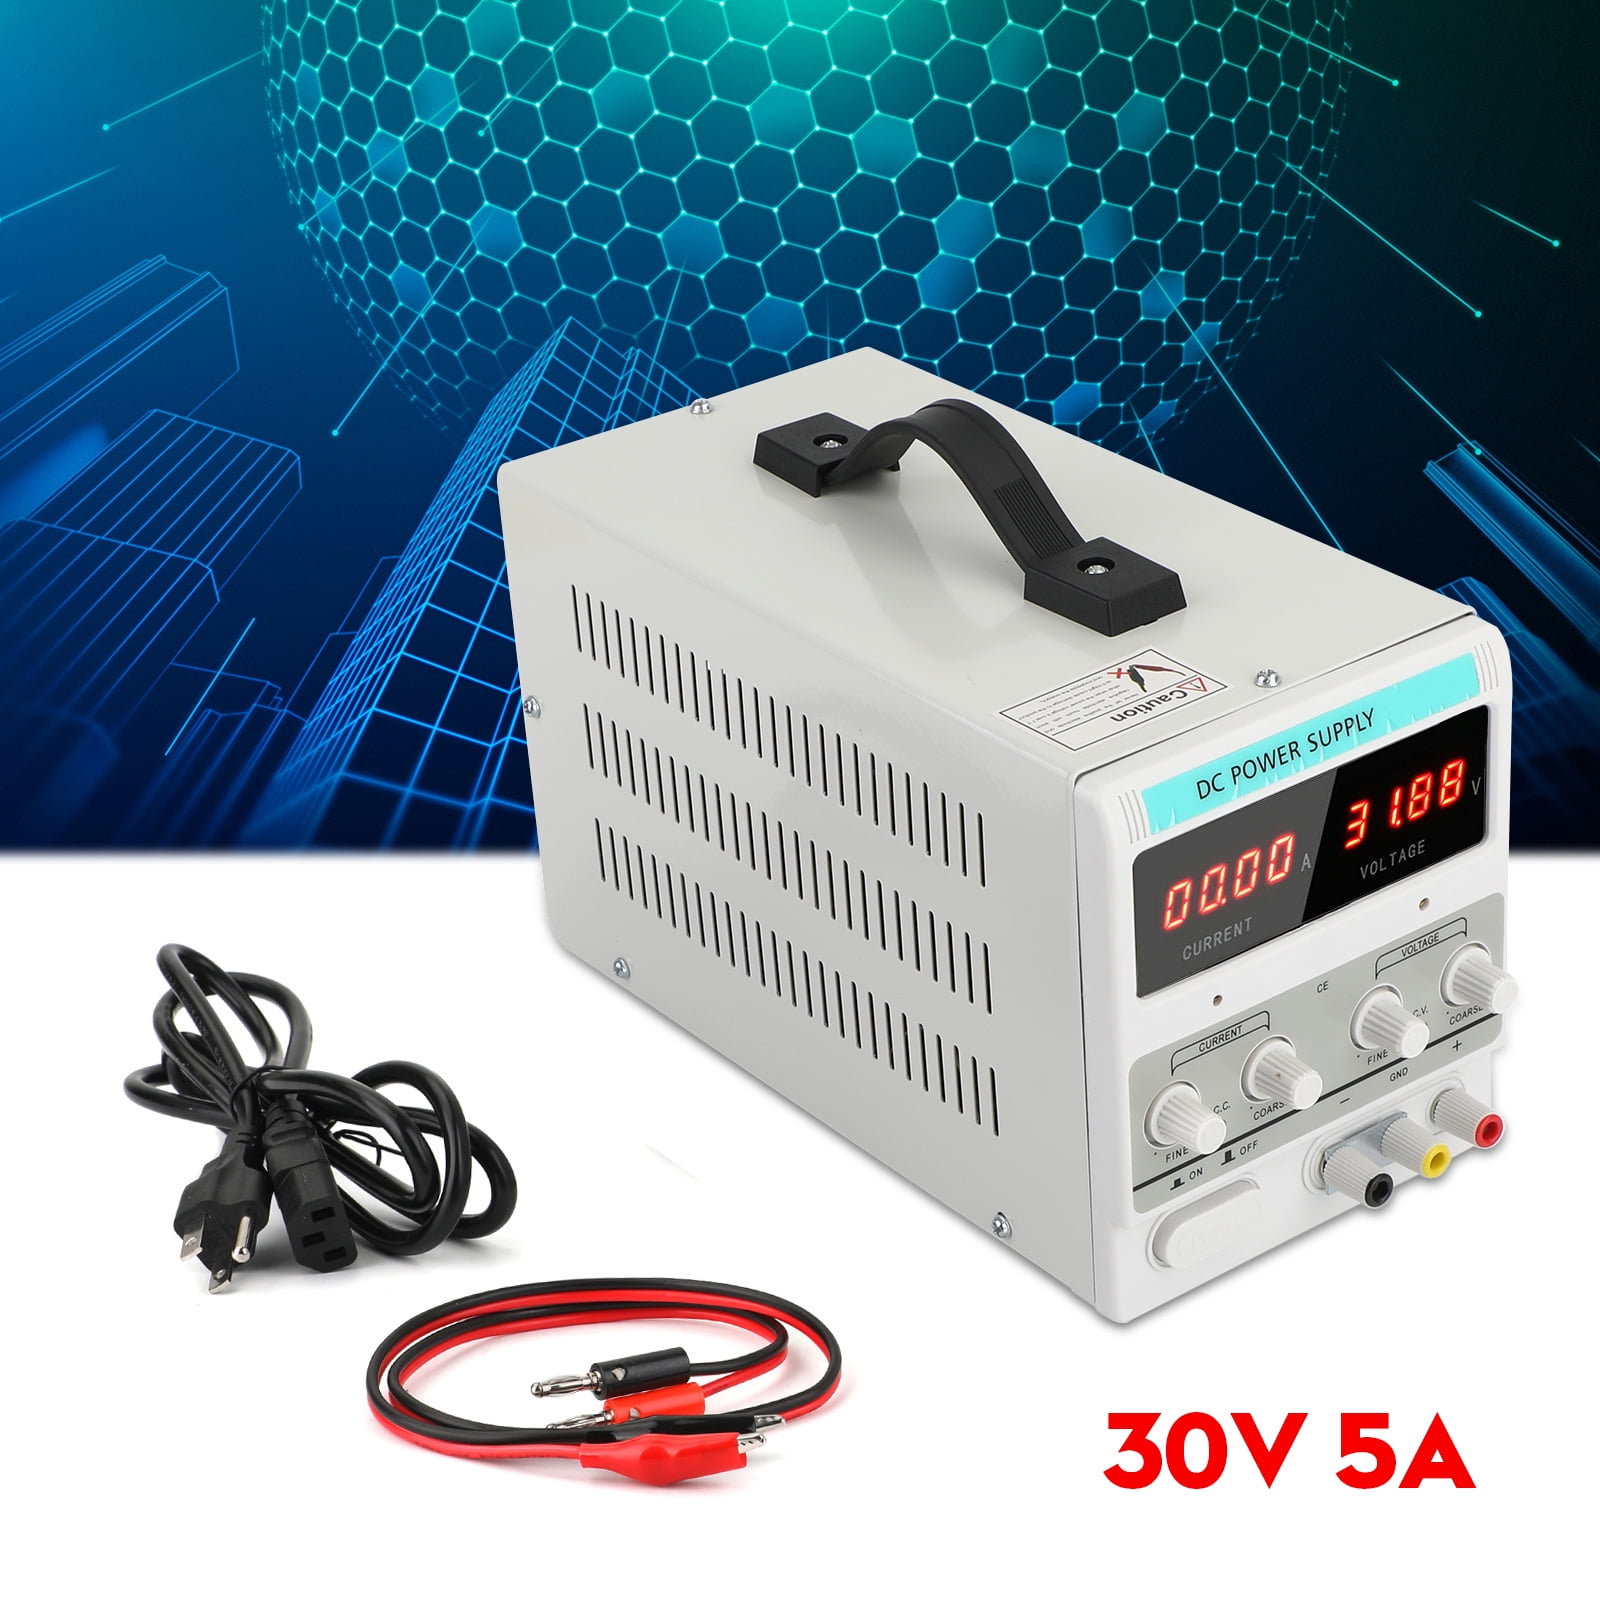 5-A 30V Adjustable DC Power Supply Precision Variable Dual Digital Lab Test 110V 